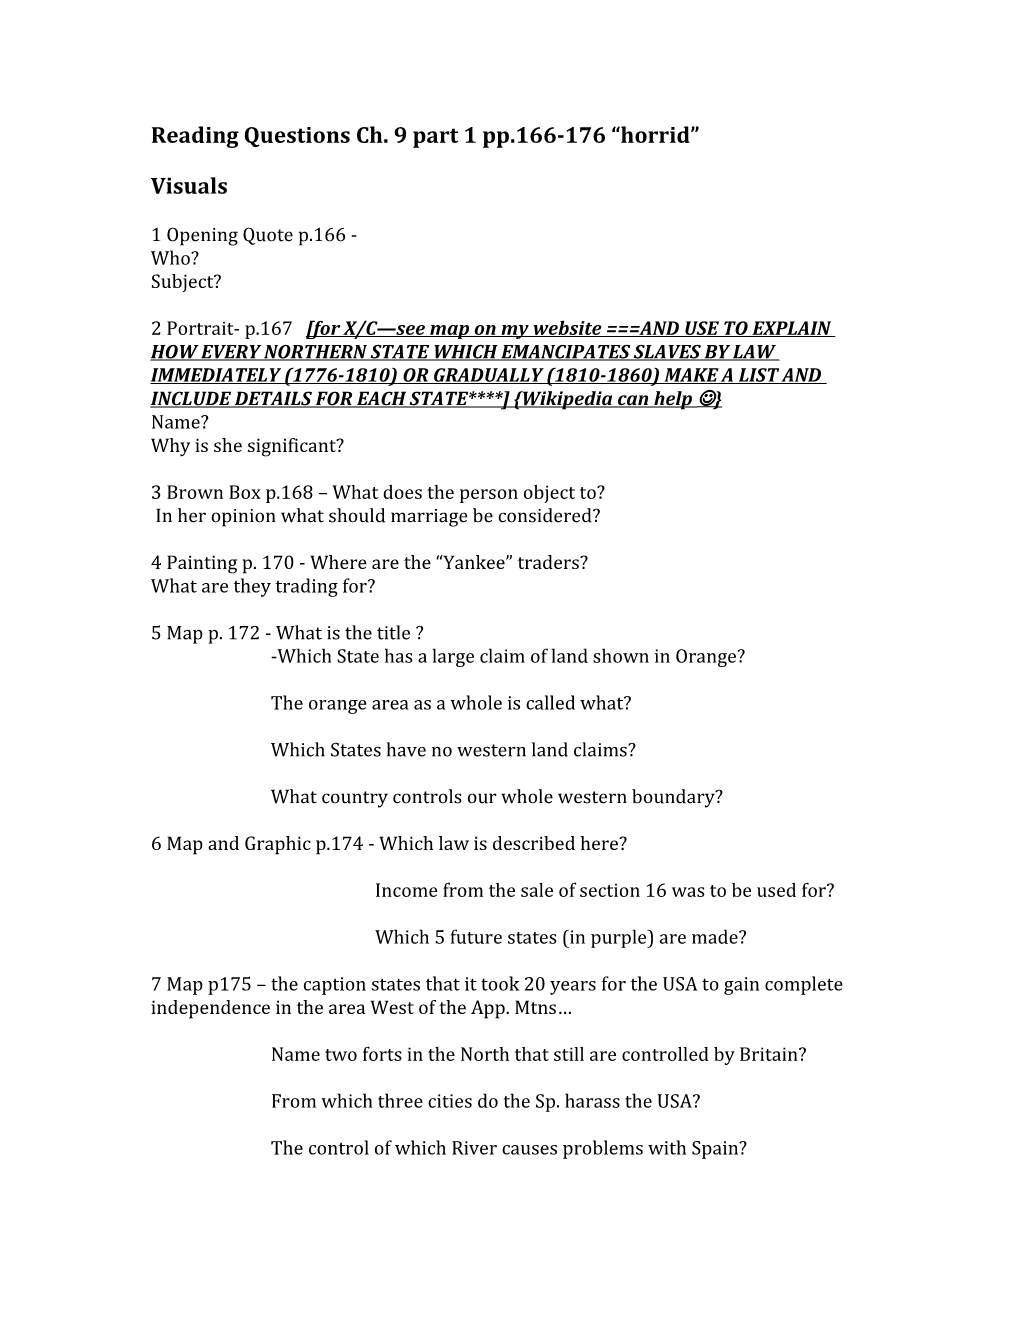 Reading Questions Ch. 9 Part 1 Pp.166-176 Horrid